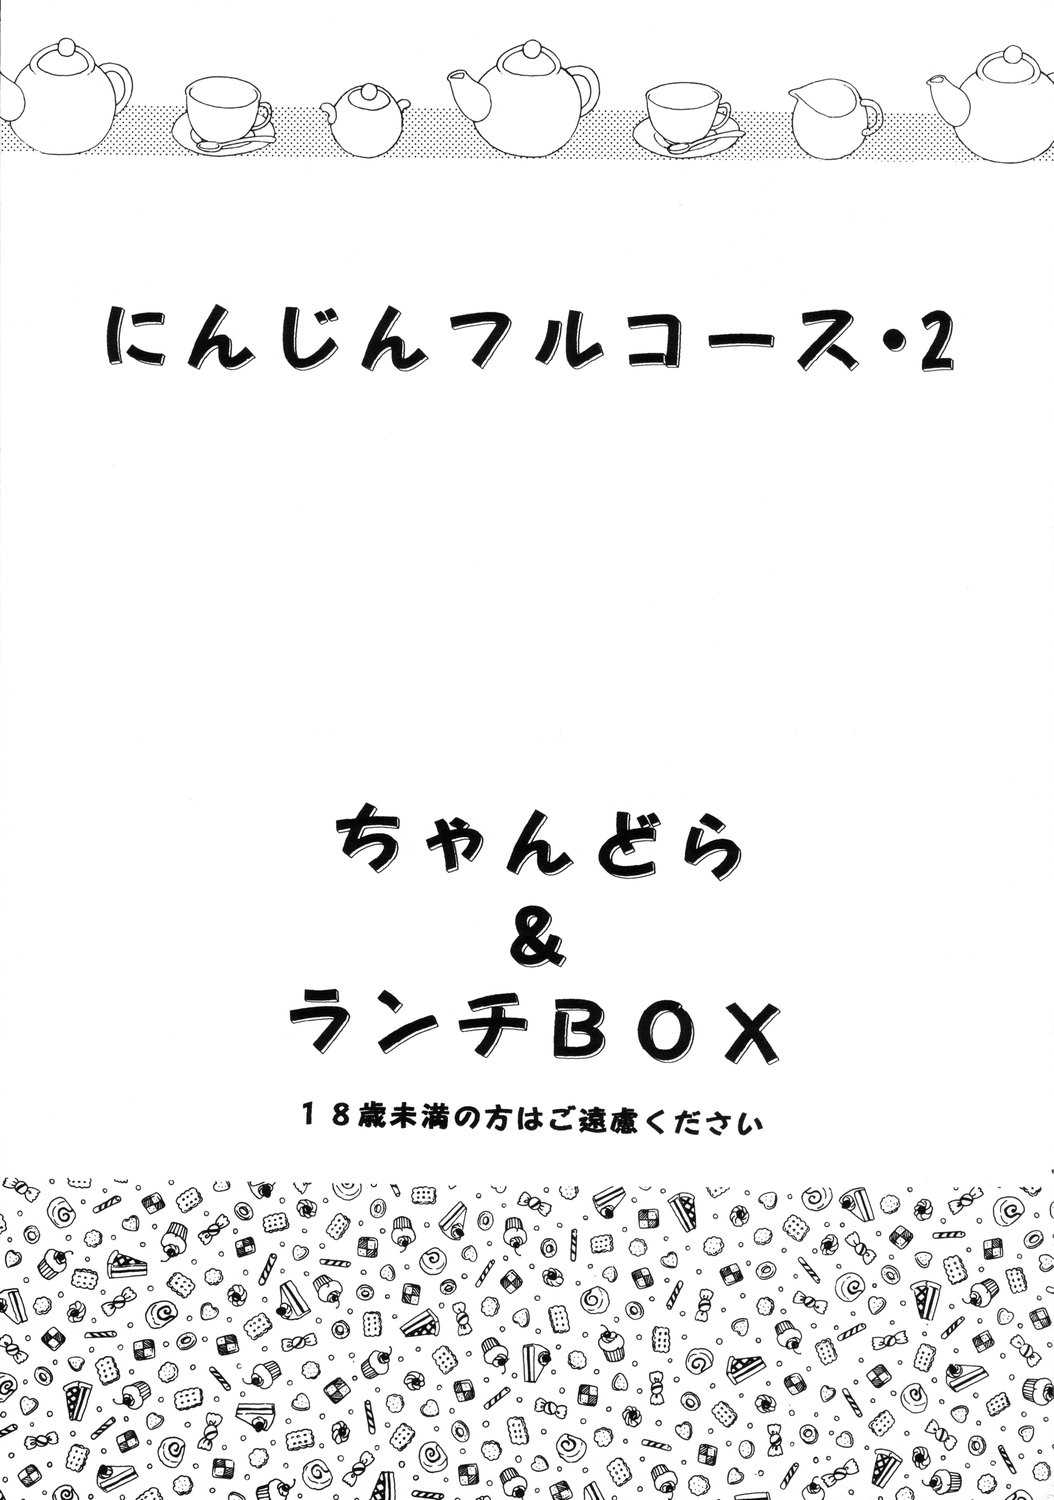 Lunch Box 40 - Ninjin Furukosu 2 (Lunch Box) にんじんフルコース 2